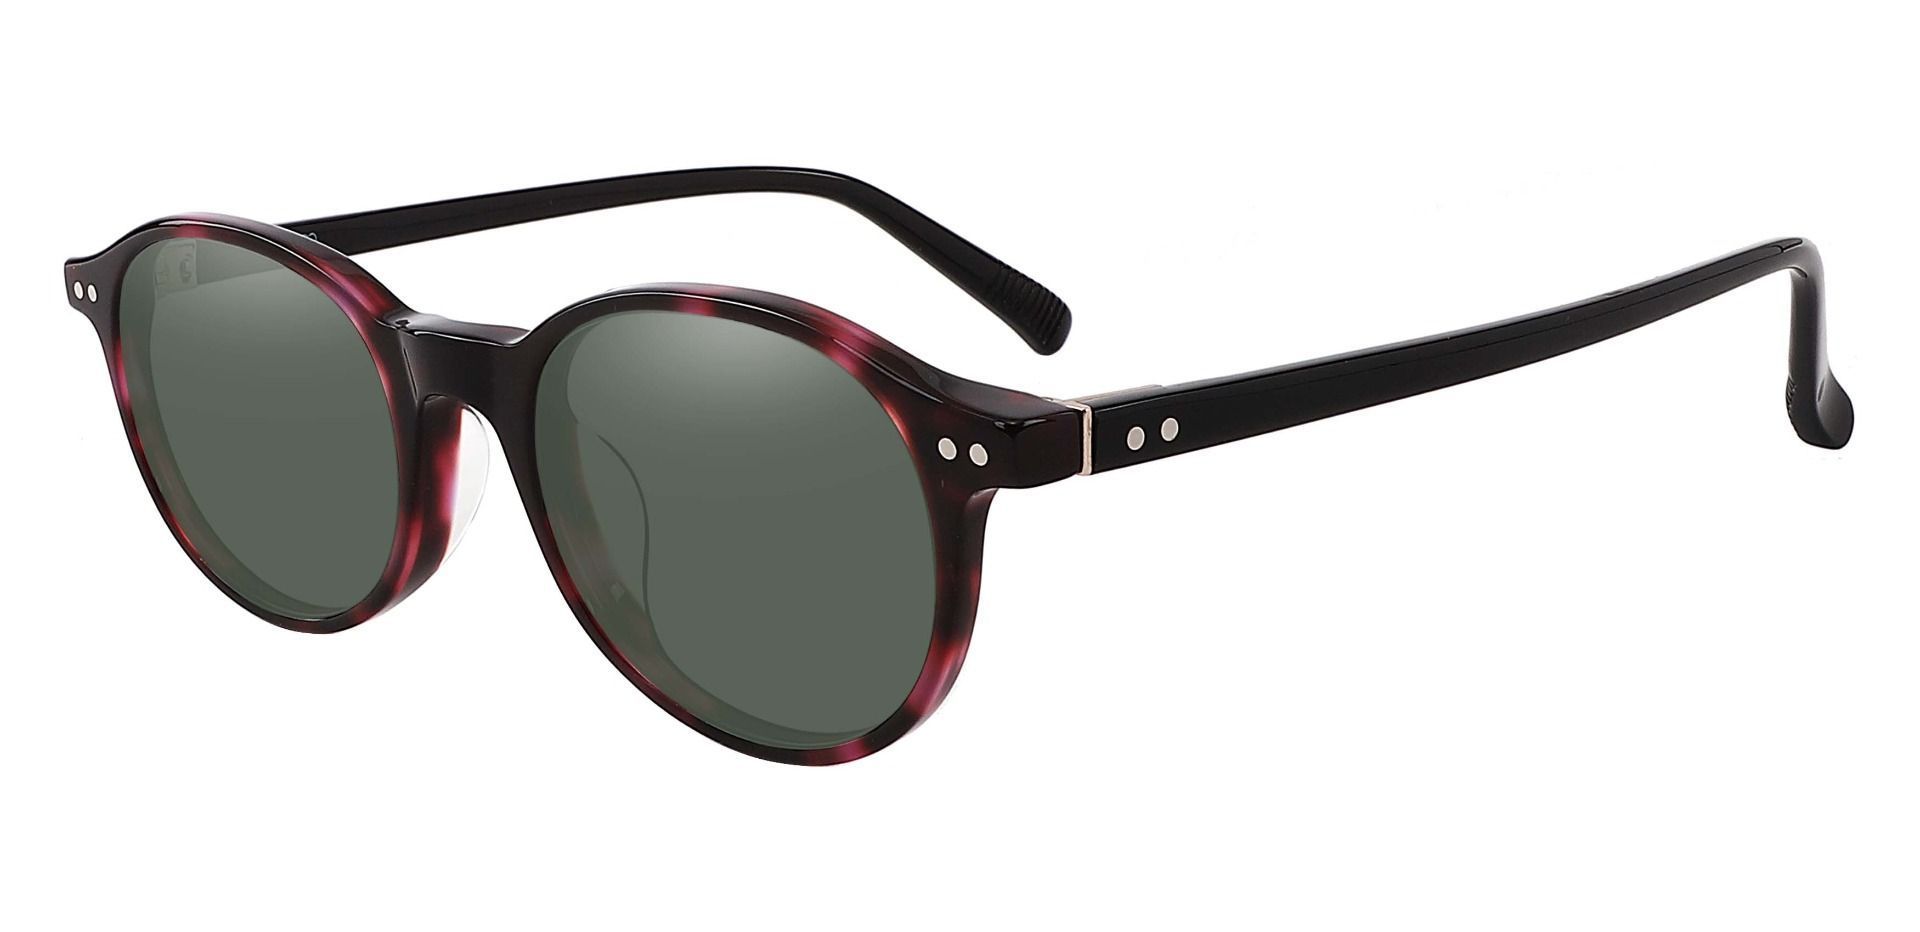 Avon Oval Non-Rx Sunglasses - Tortoise Frame With Green Lenses